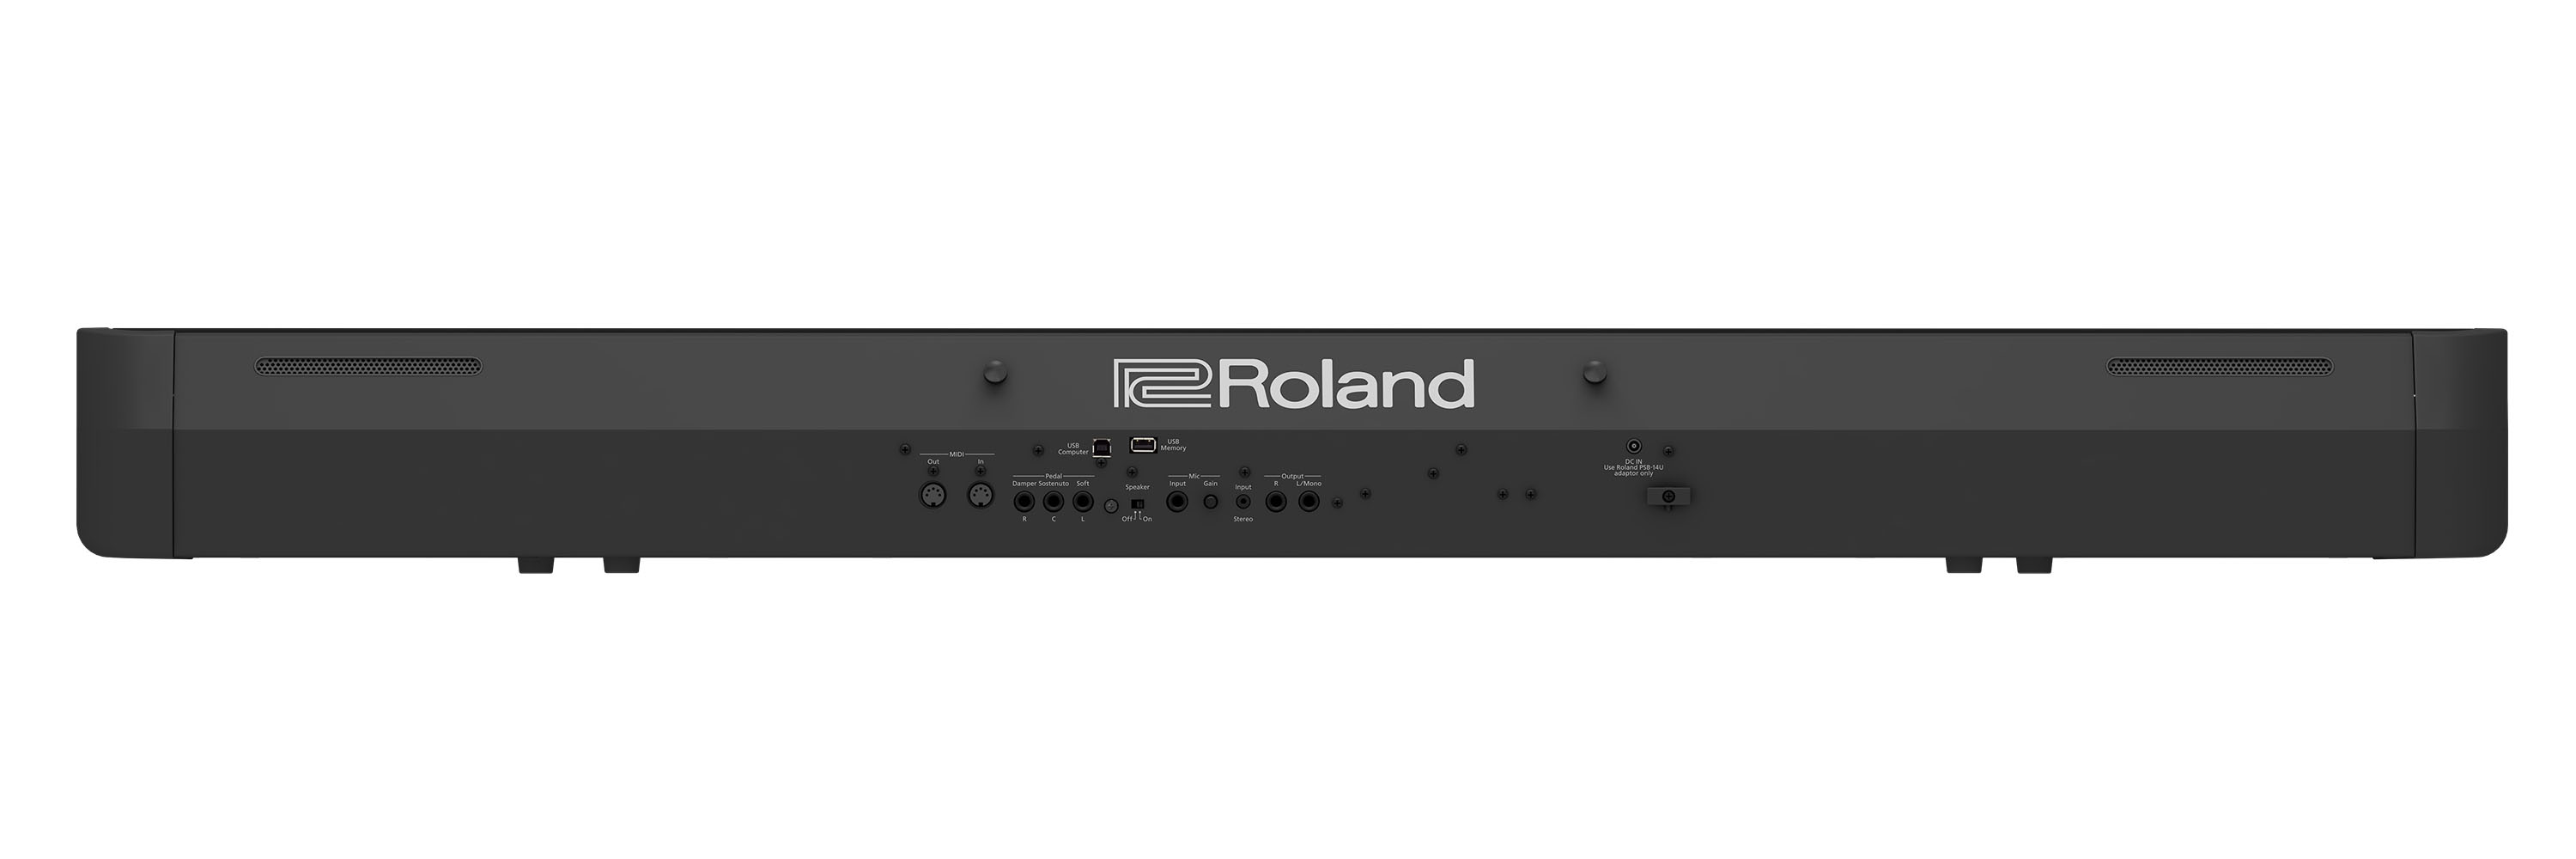 Roland Fp-90x Bk - Digital Klavier - Variation 3